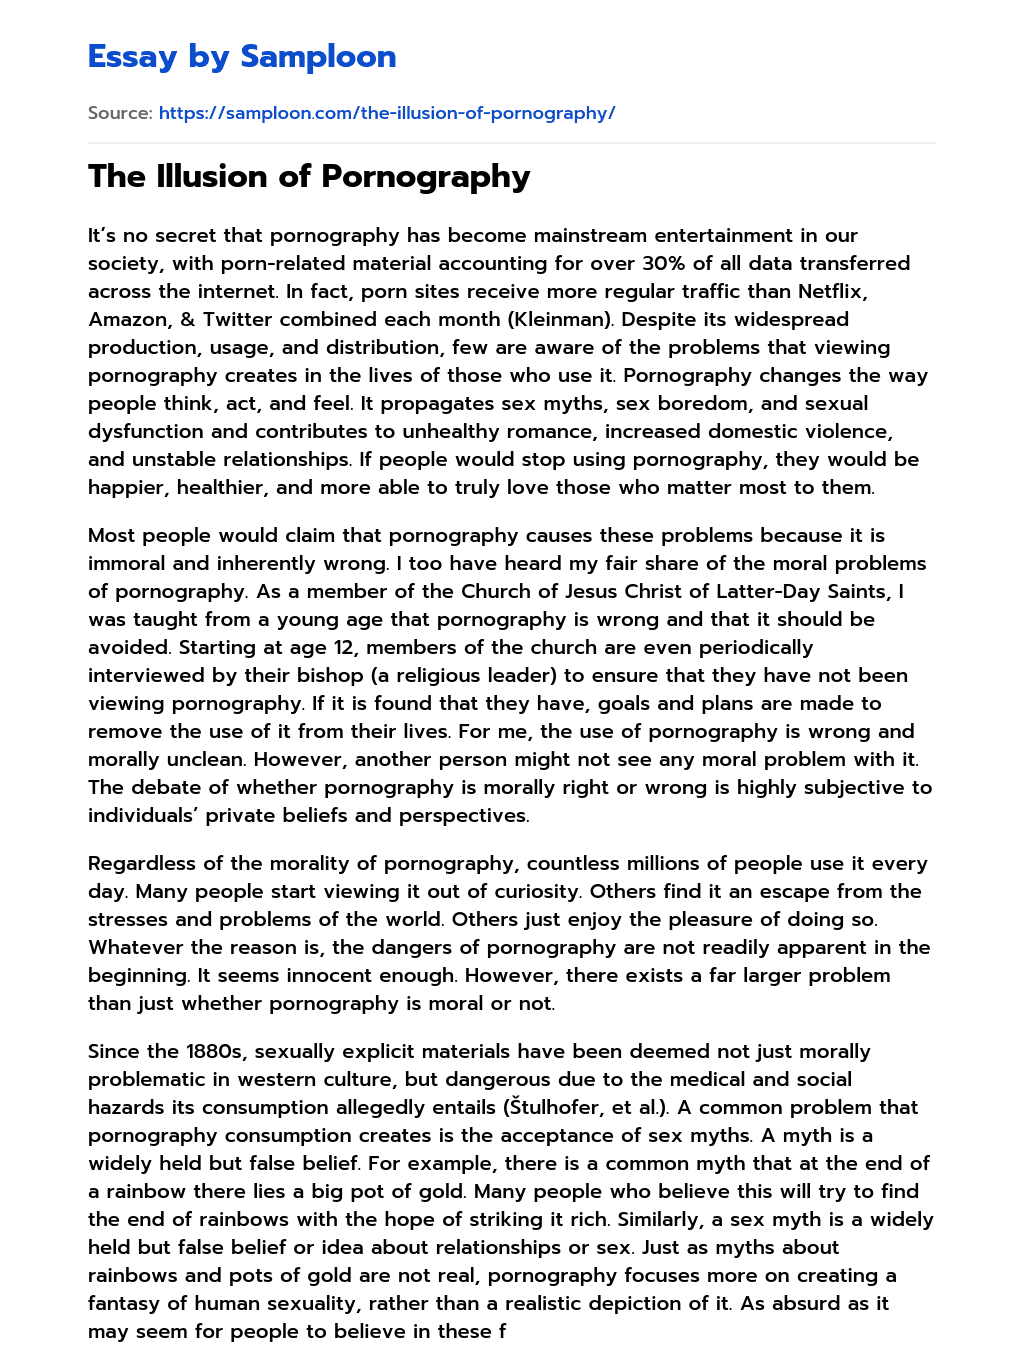 The Illusion of Pornography essay